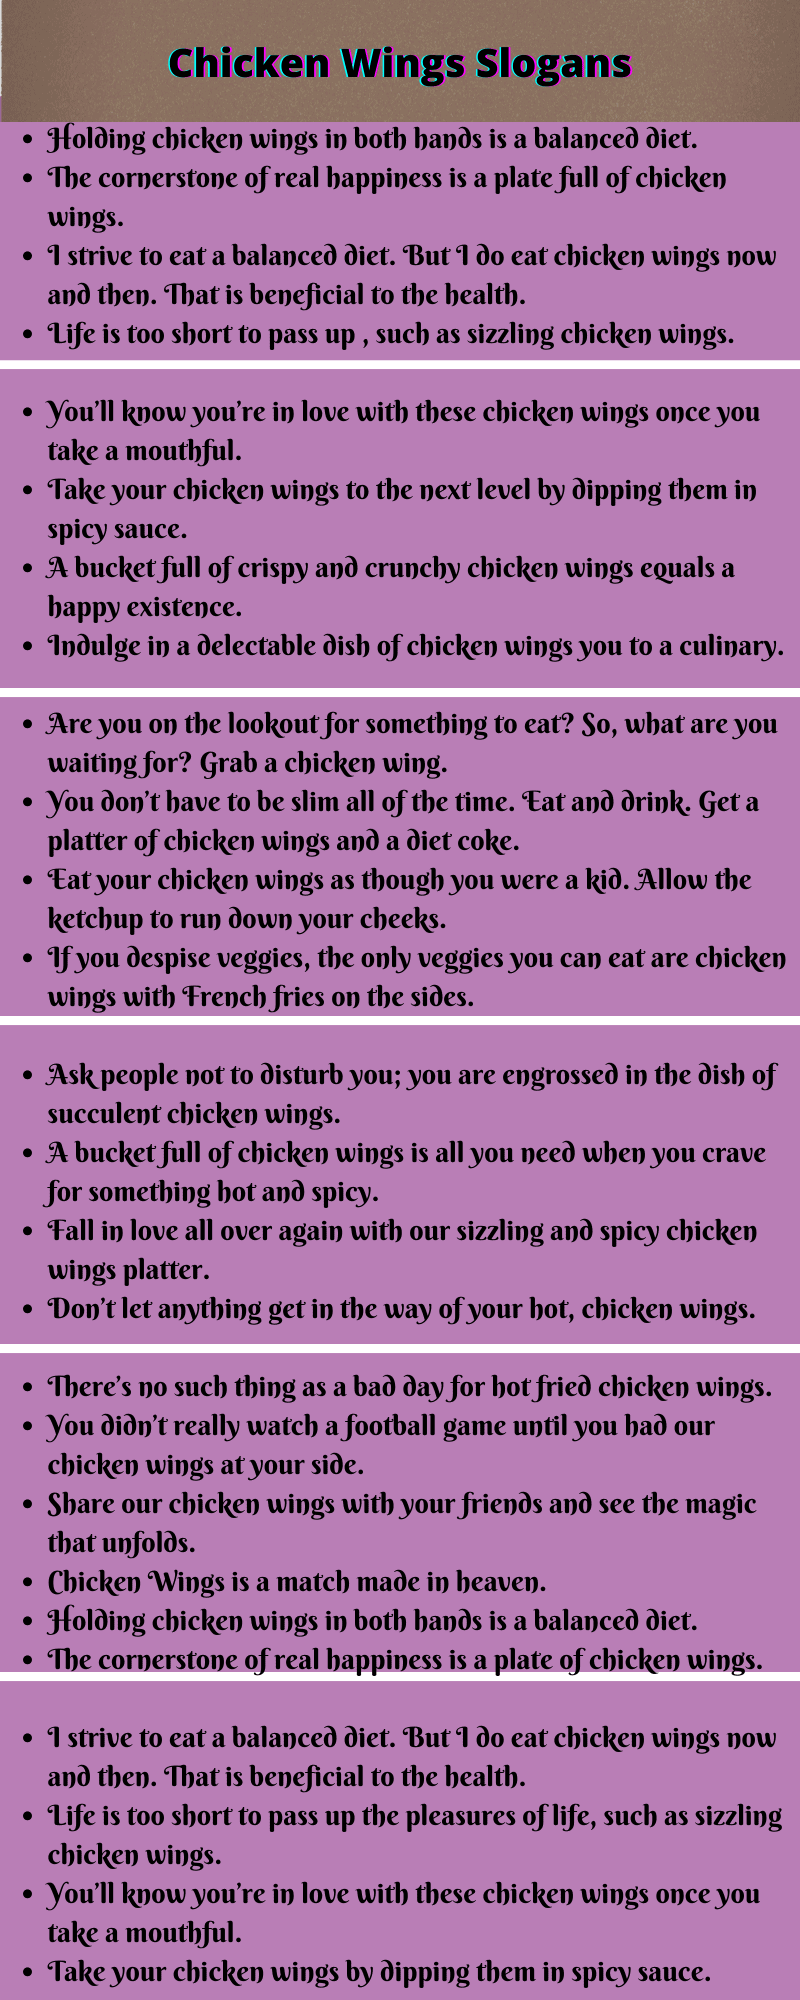 Chicken Wings Slogans 